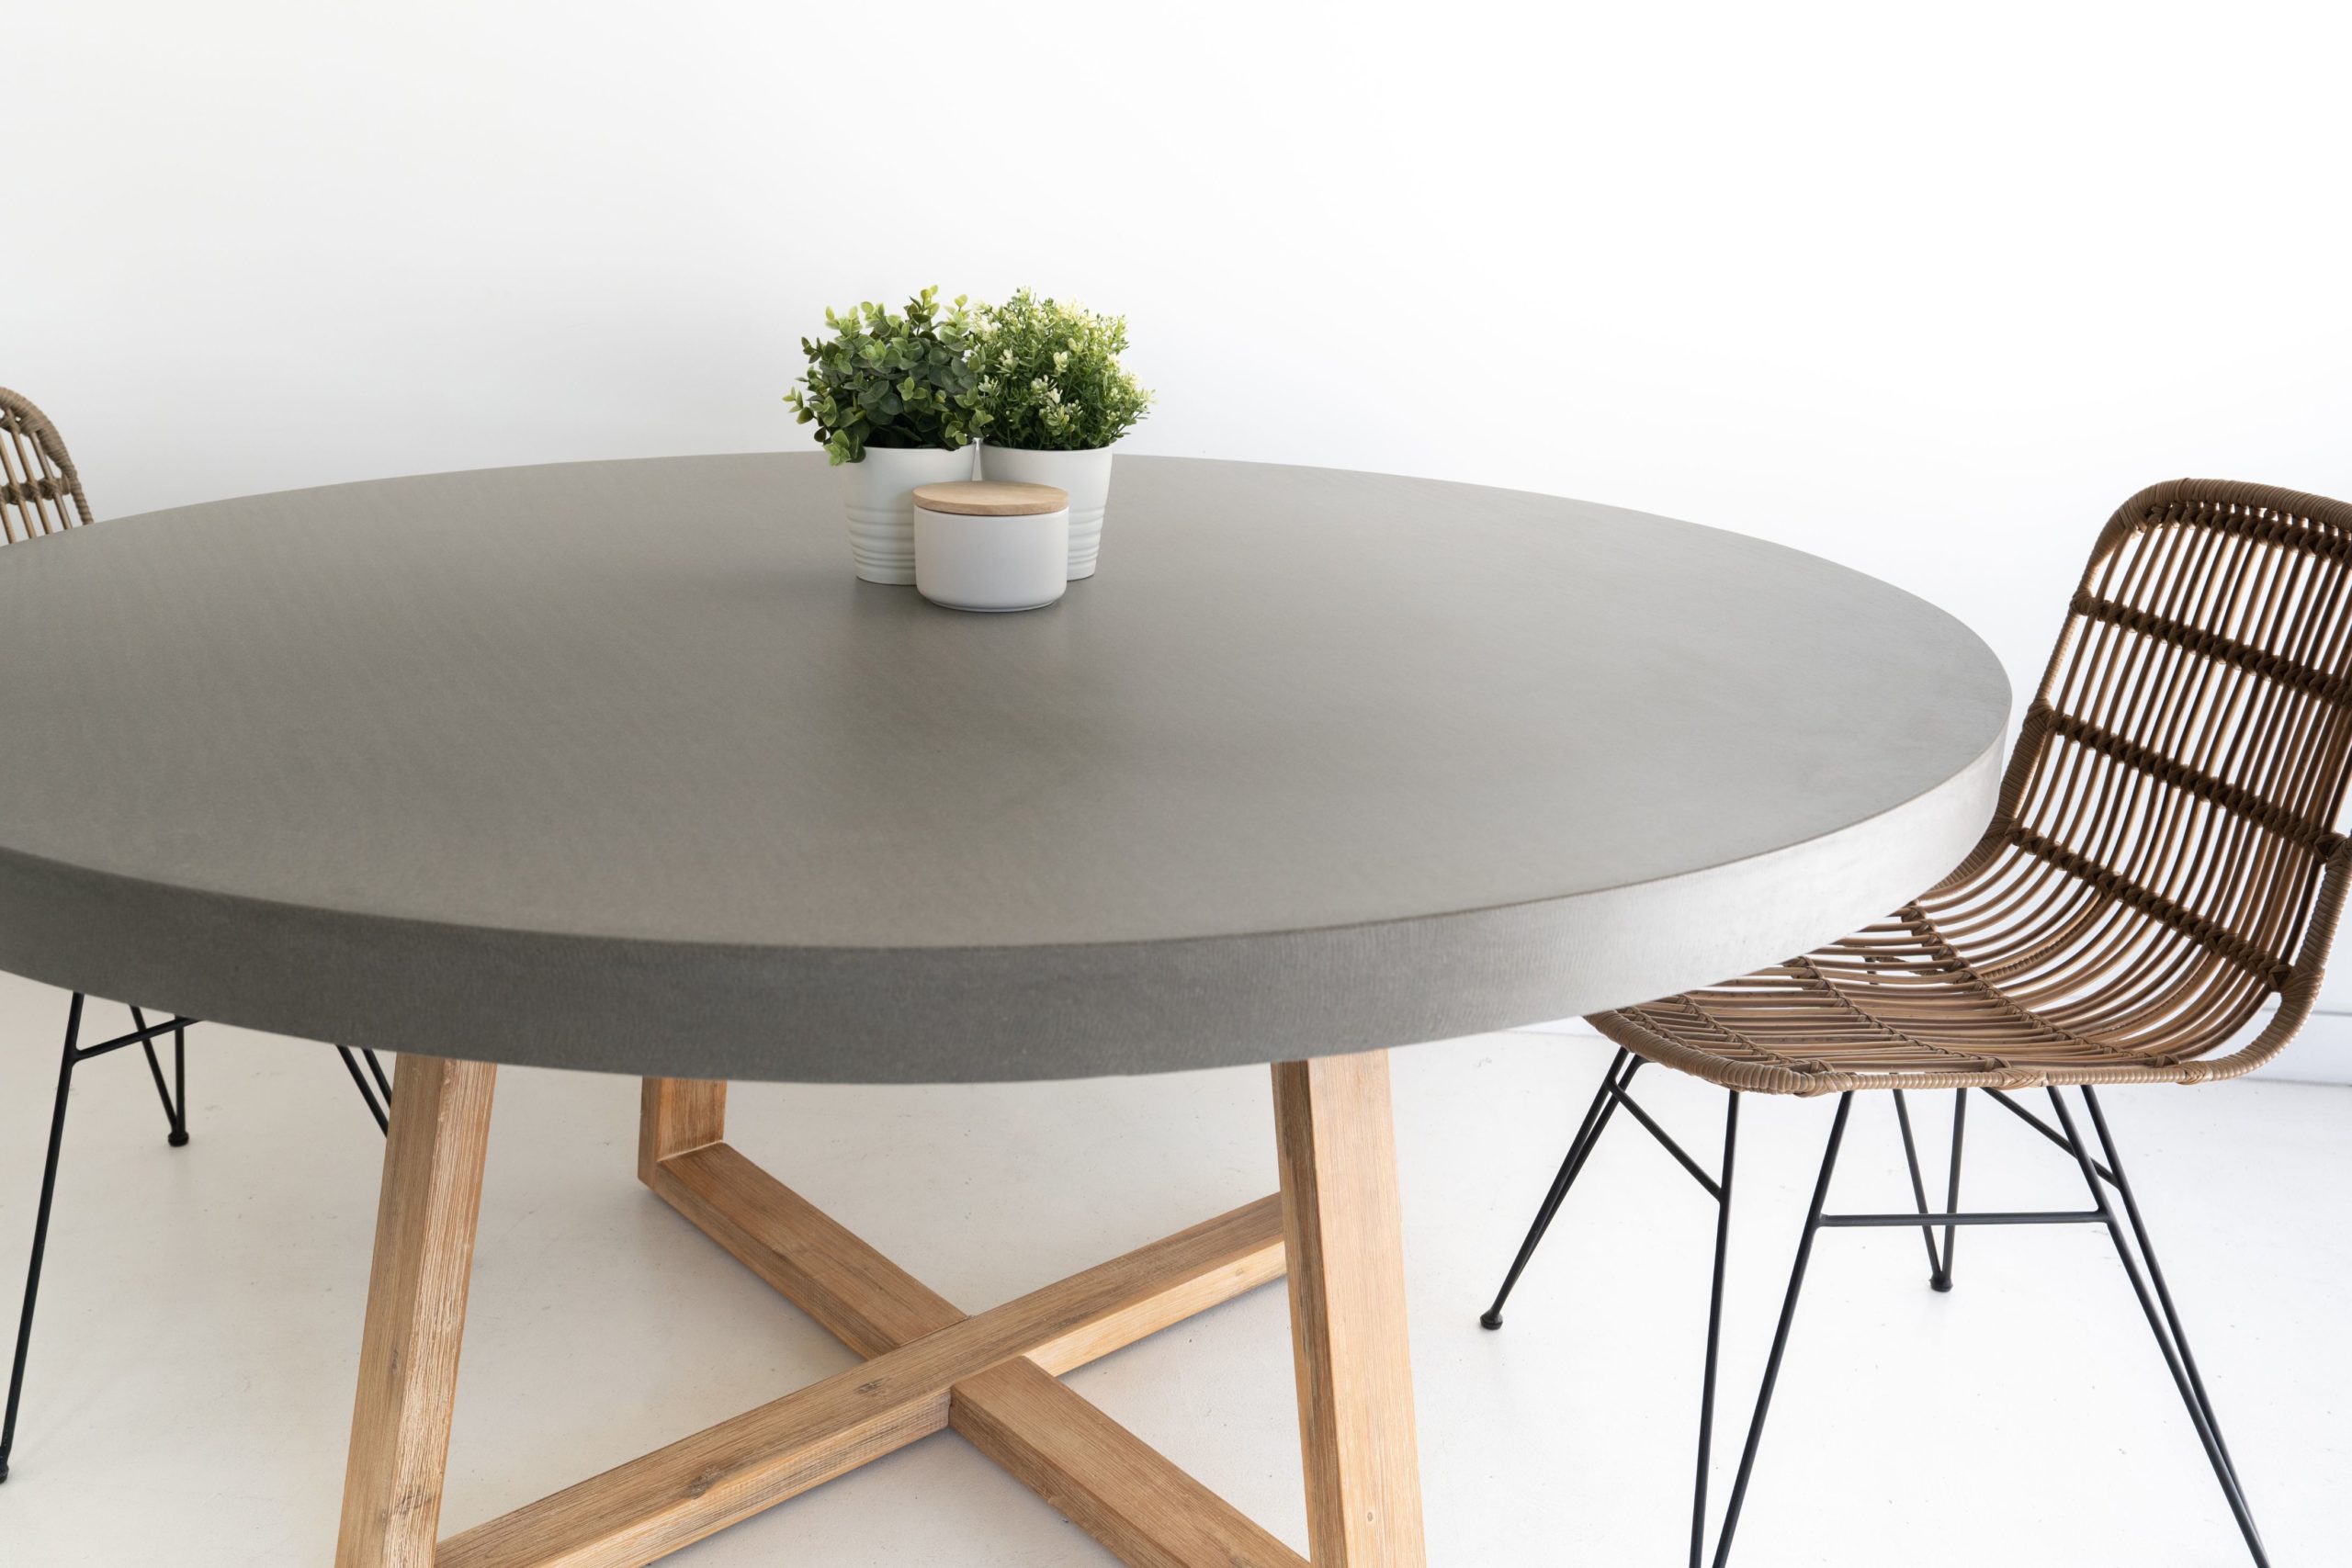 1.6m Alta Elkstone Round Dining Table - Pebble Grey with Light Honey Legs